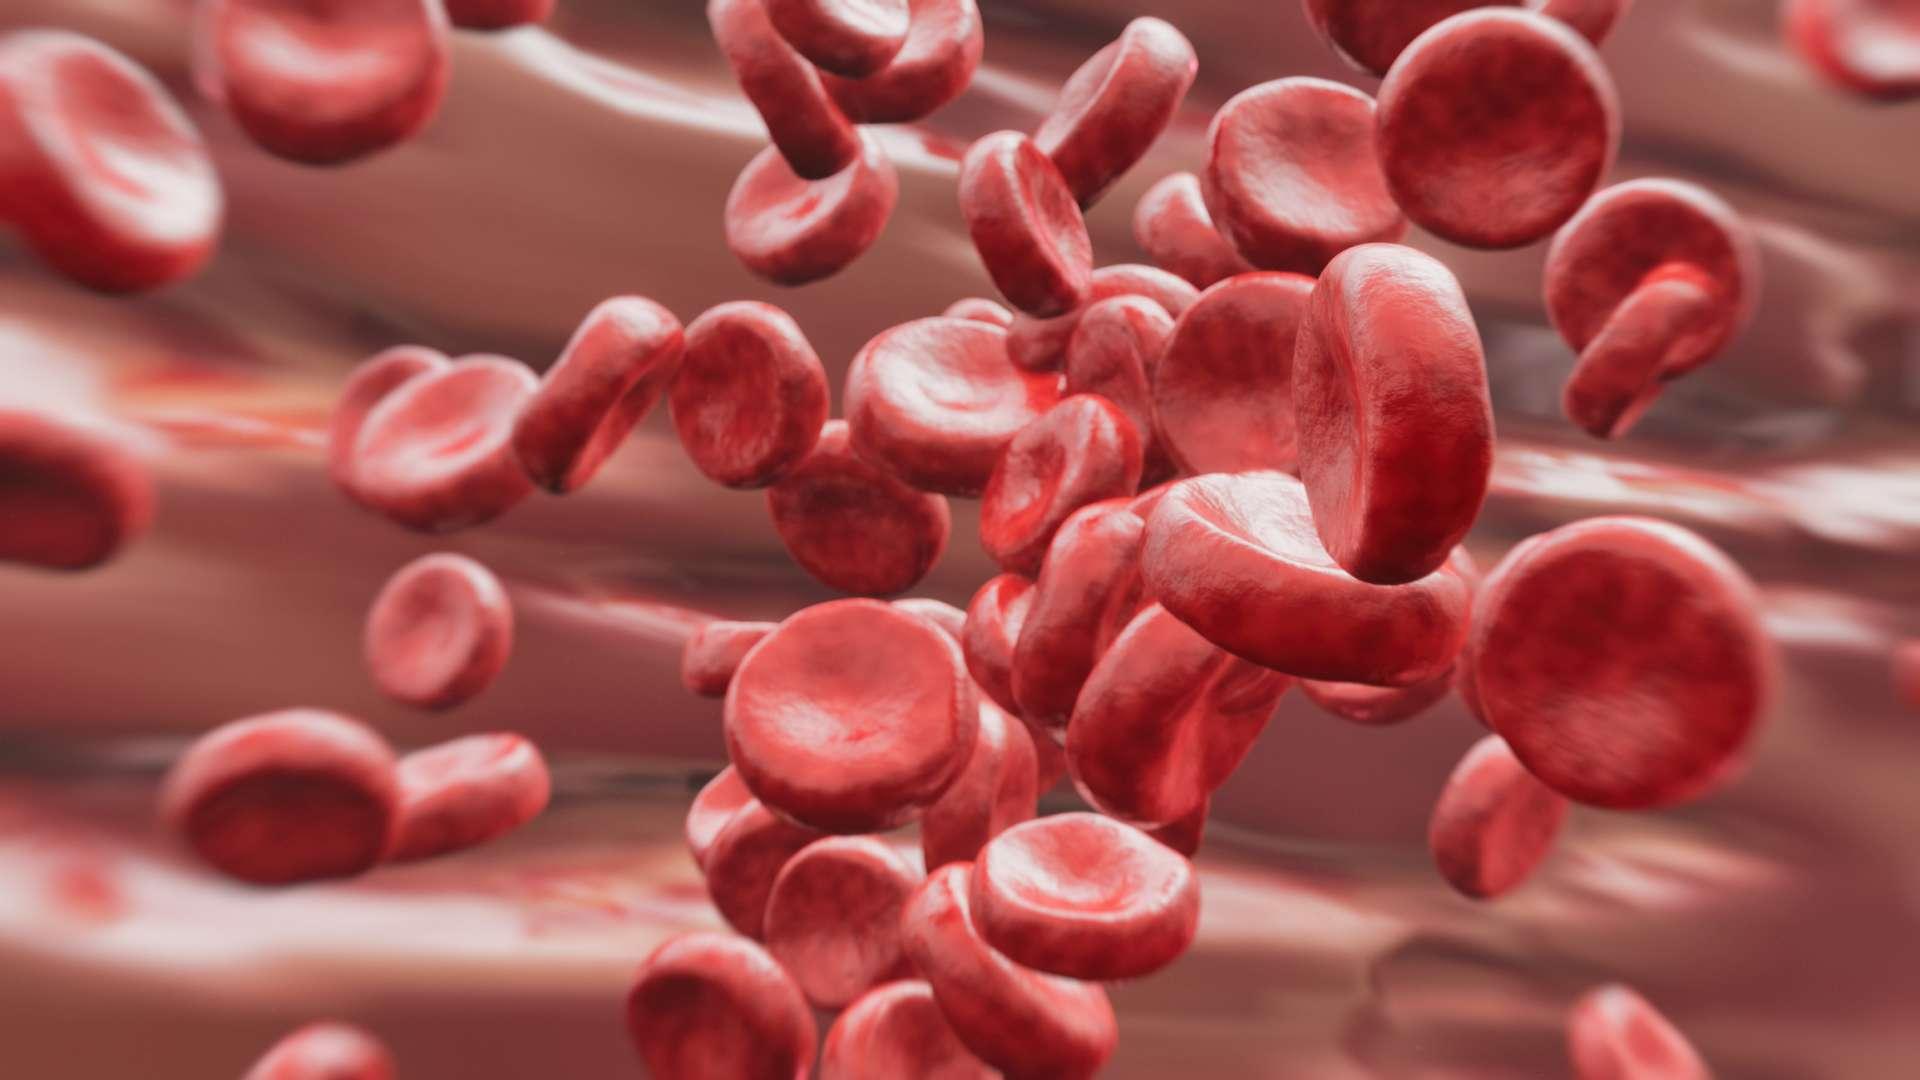 Bloodstream - 3d rendered image,blood cells inside body, erythrocytes. Medicine, paramedic, health-care biology, microbiology concept.